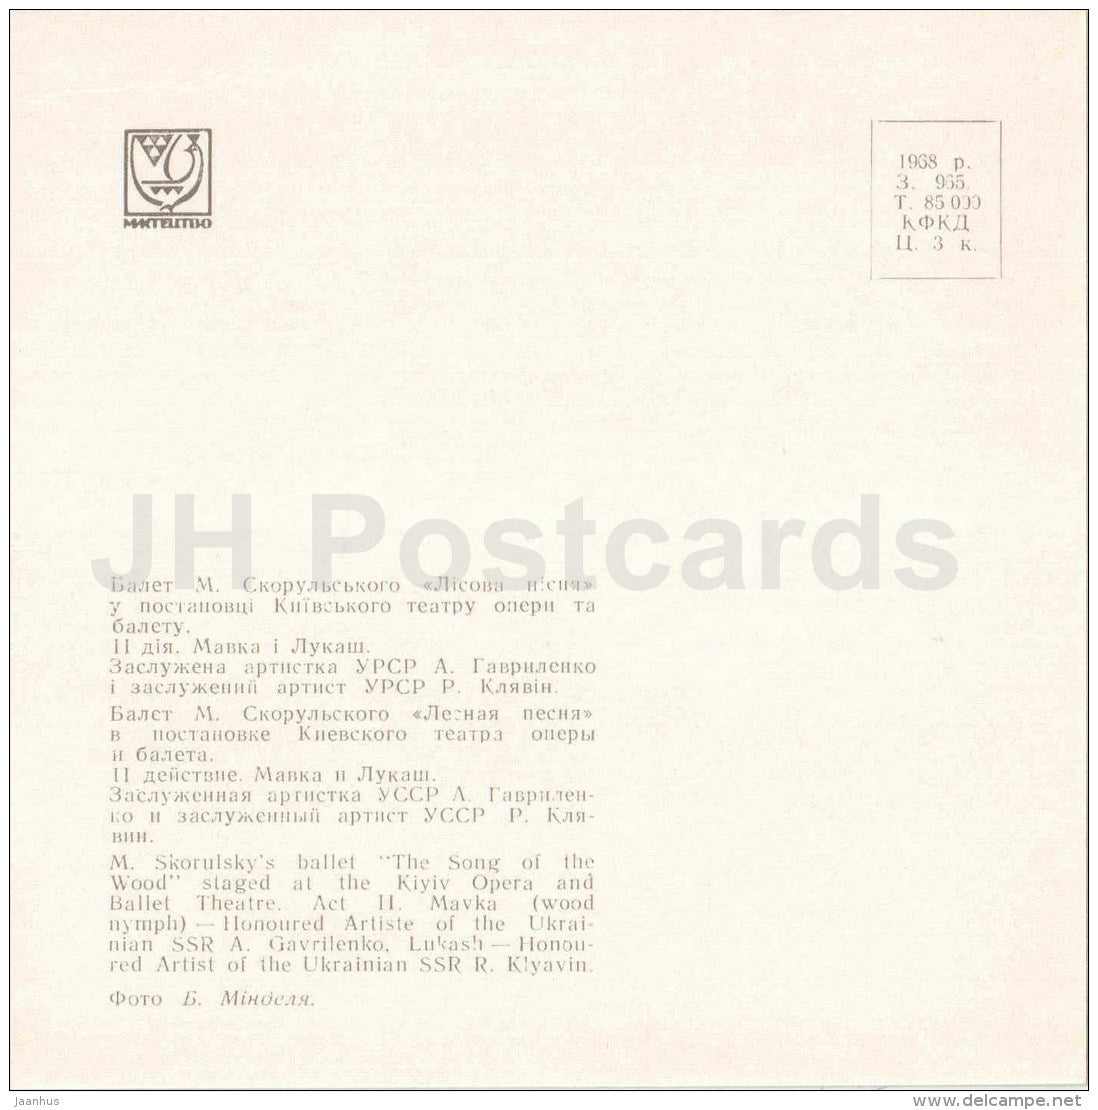 Mavka , A. Gavrilenko - Lukash , L. Klyavin - The Song of the Wood by Skorulsky - Ballet - 1968 - Ukraine USSR - unused - JH Postcards